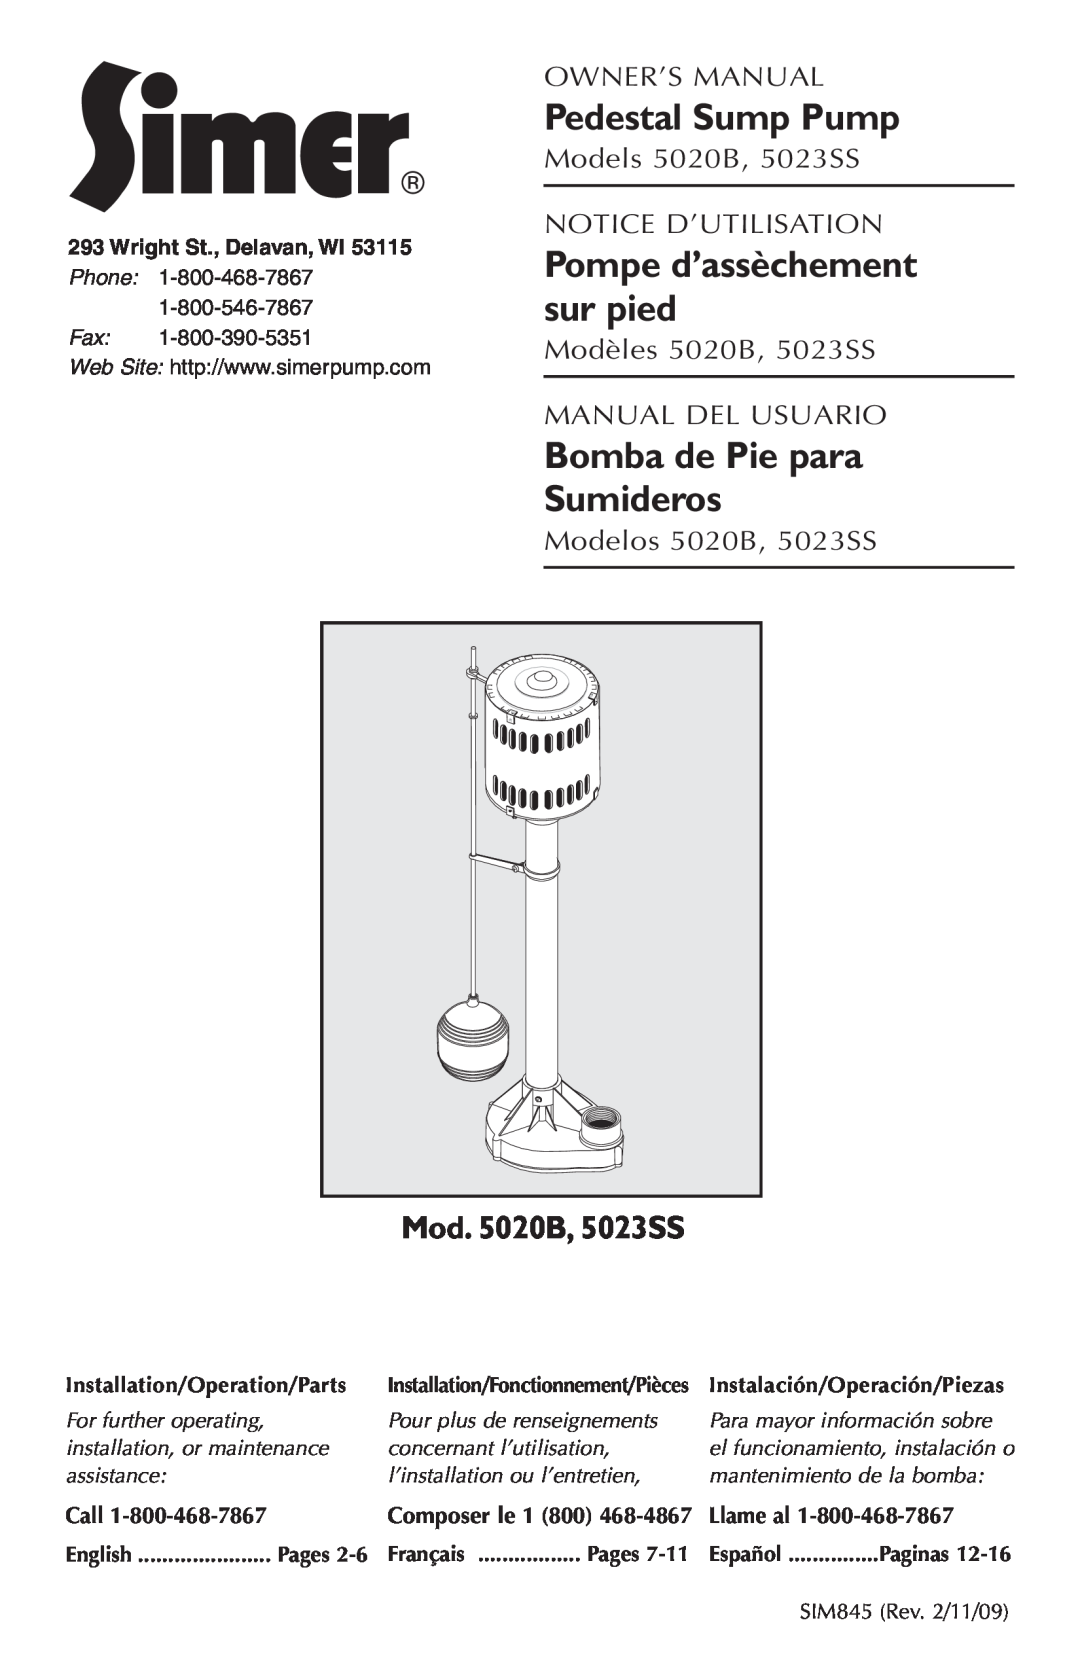 Simer Pumps owner manual Mod. 5020B, 5023SS, Wright St., Delavan, WI, Call, Llame al, Pages, Pedestal Sump Pump 